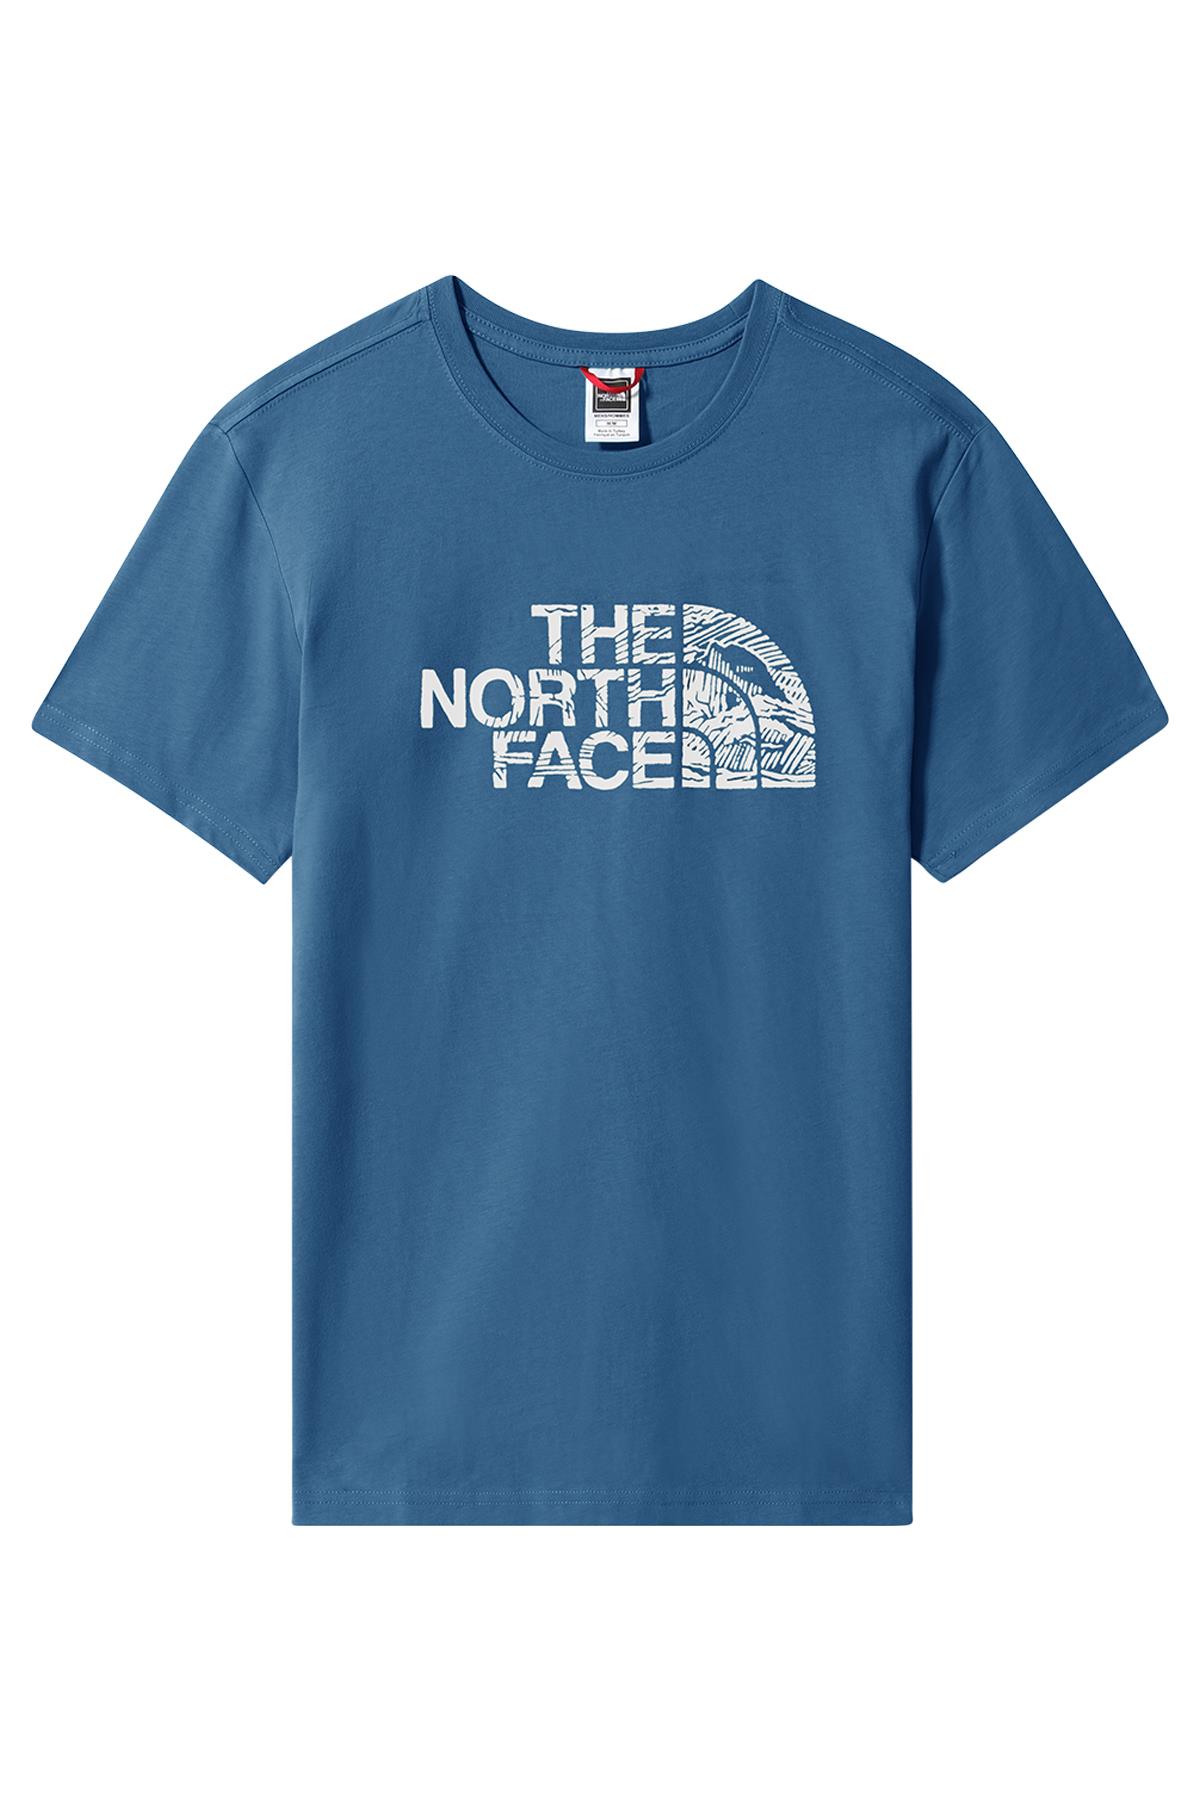 The North Face Erkek S/S Woodcut Dome Tee Banff Blue Tişört